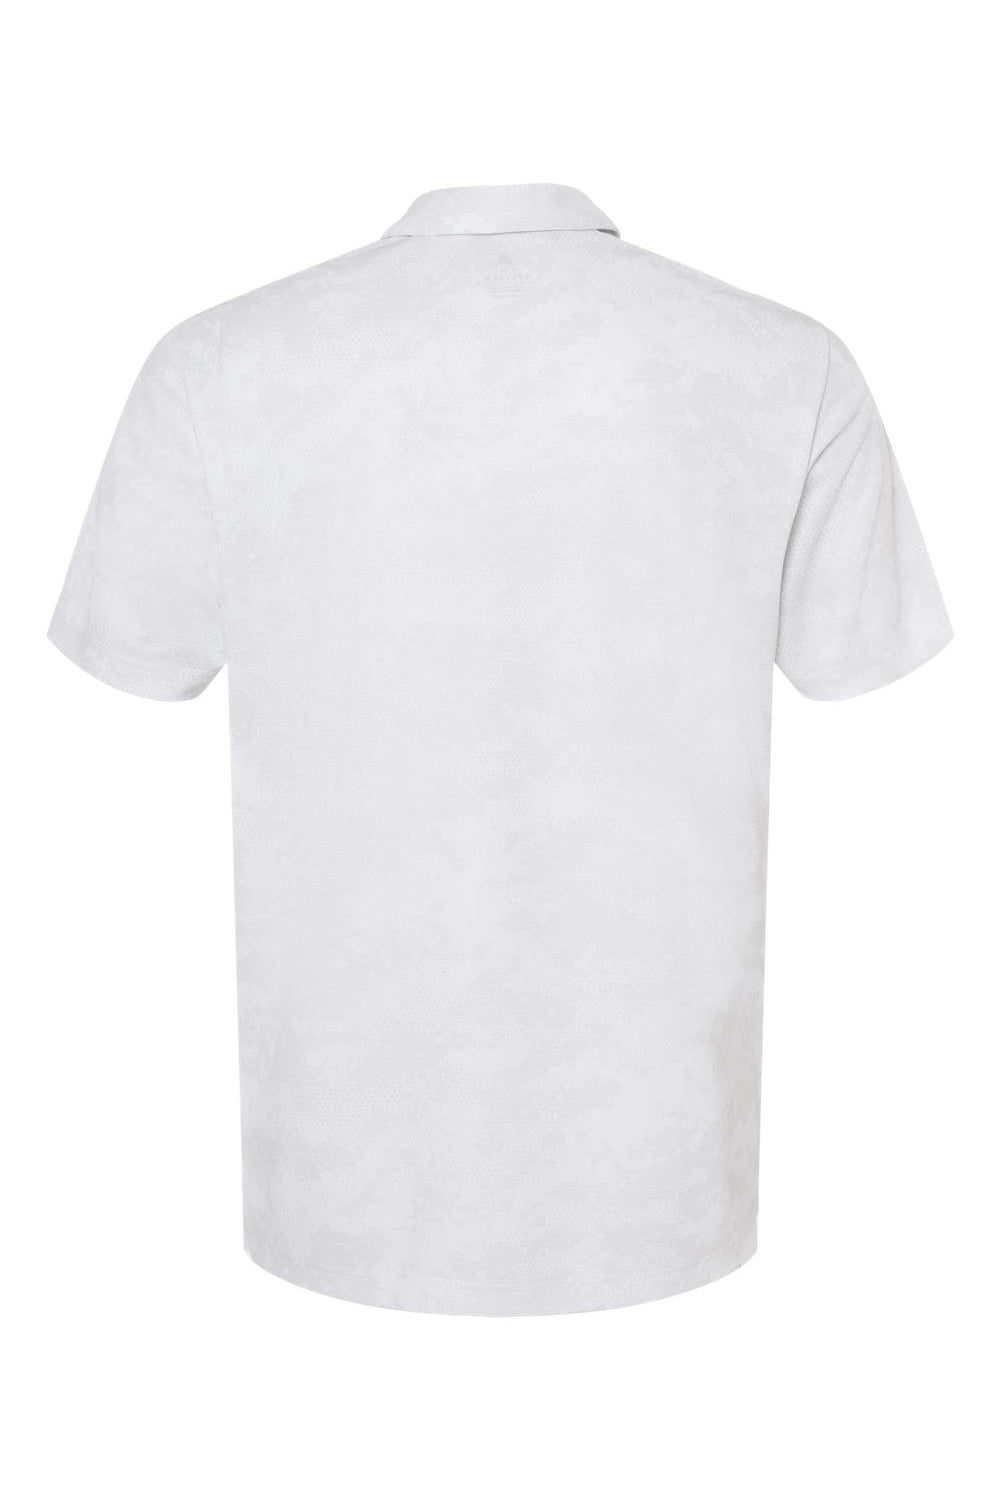 Adidas A550 Mens Camo Short Sleeve Polo Shirt White Flat Back